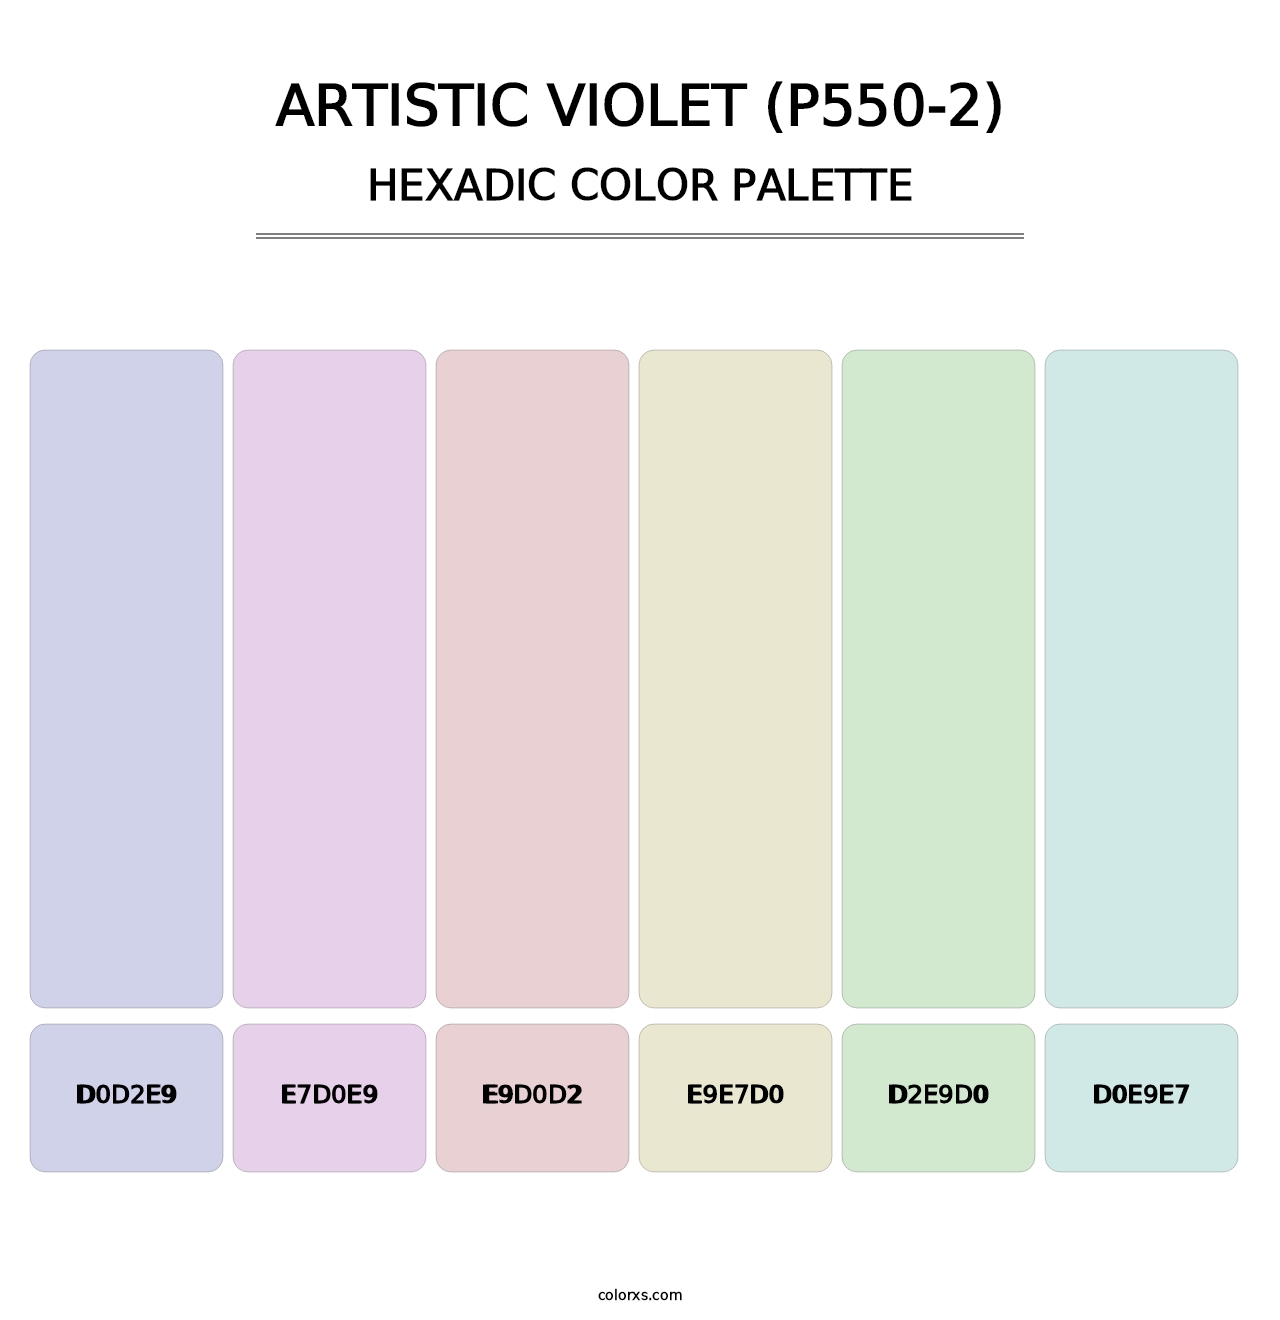 Artistic Violet (P550-2) - Hexadic Color Palette